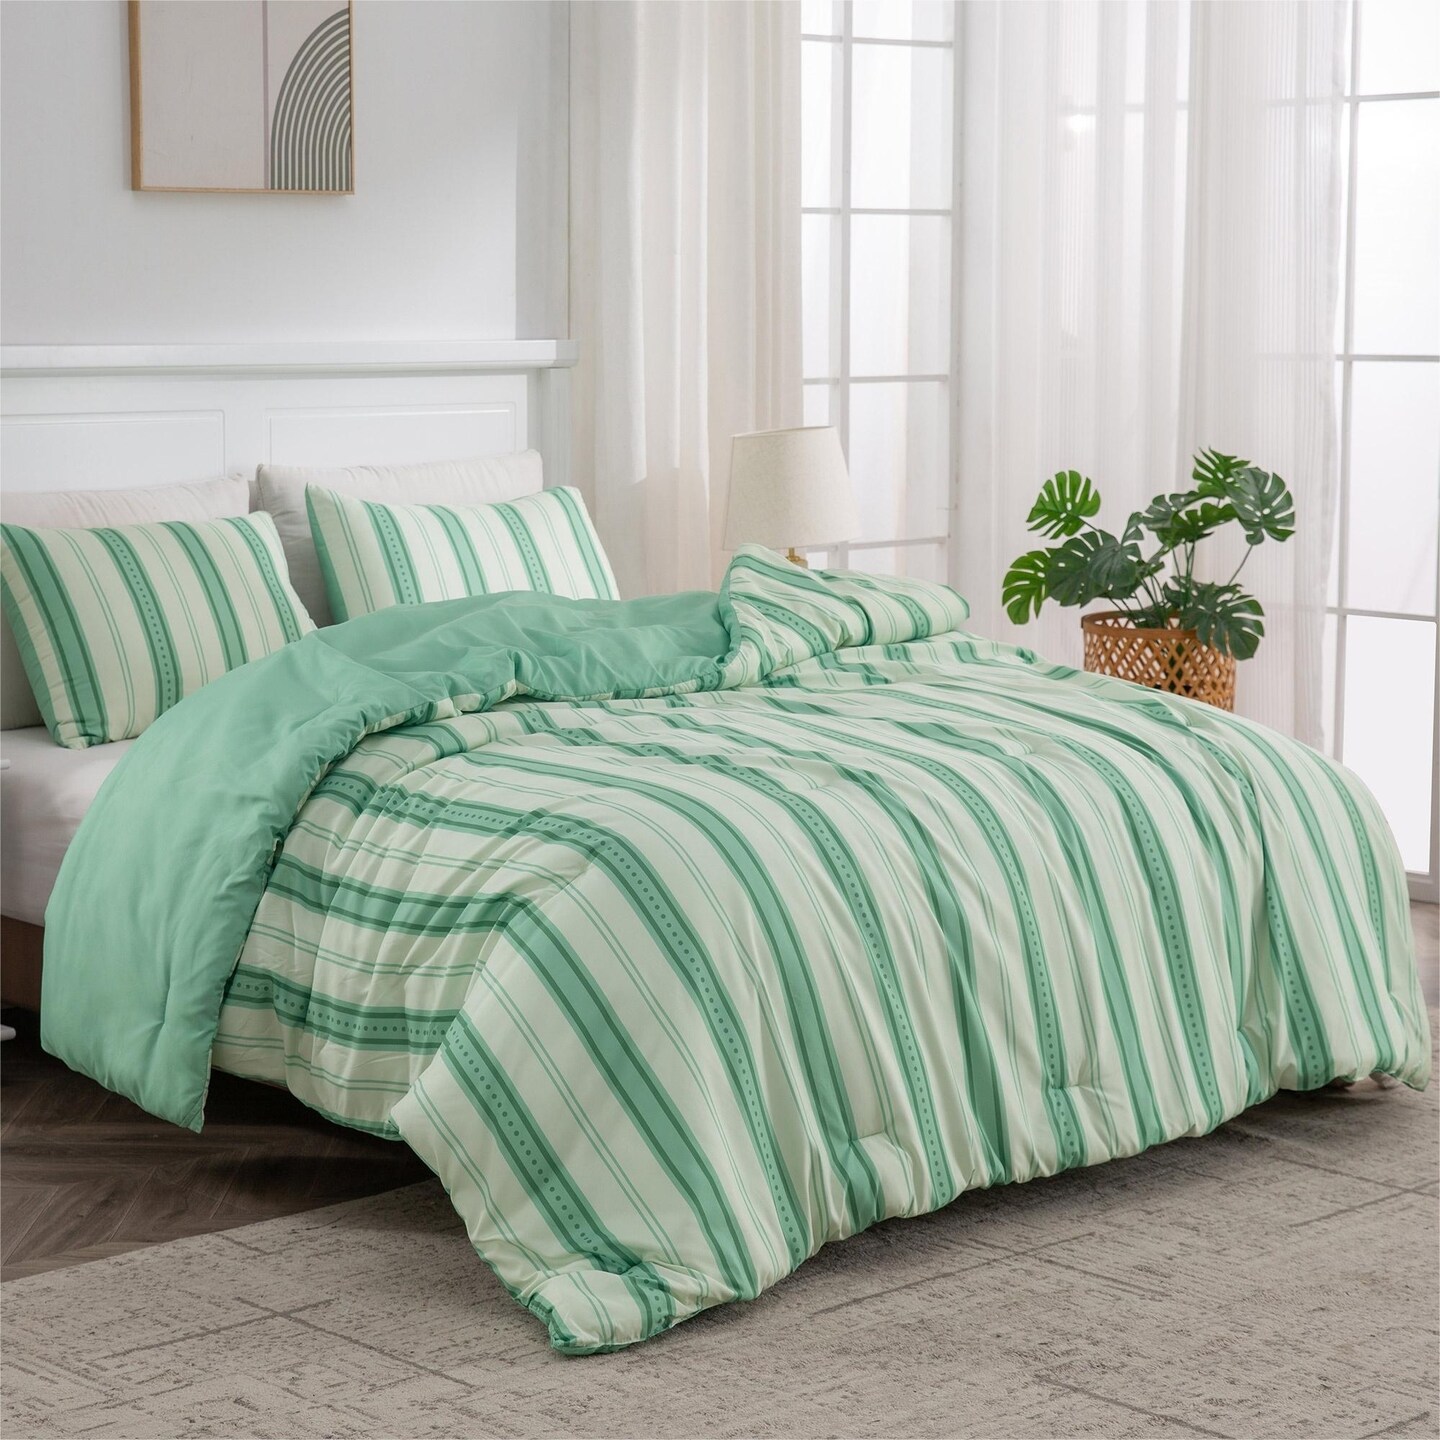 Peace Nest Ultra Soft Reversible Printed Stripe Microfiber Comforter Set - All-Season Warmth Green